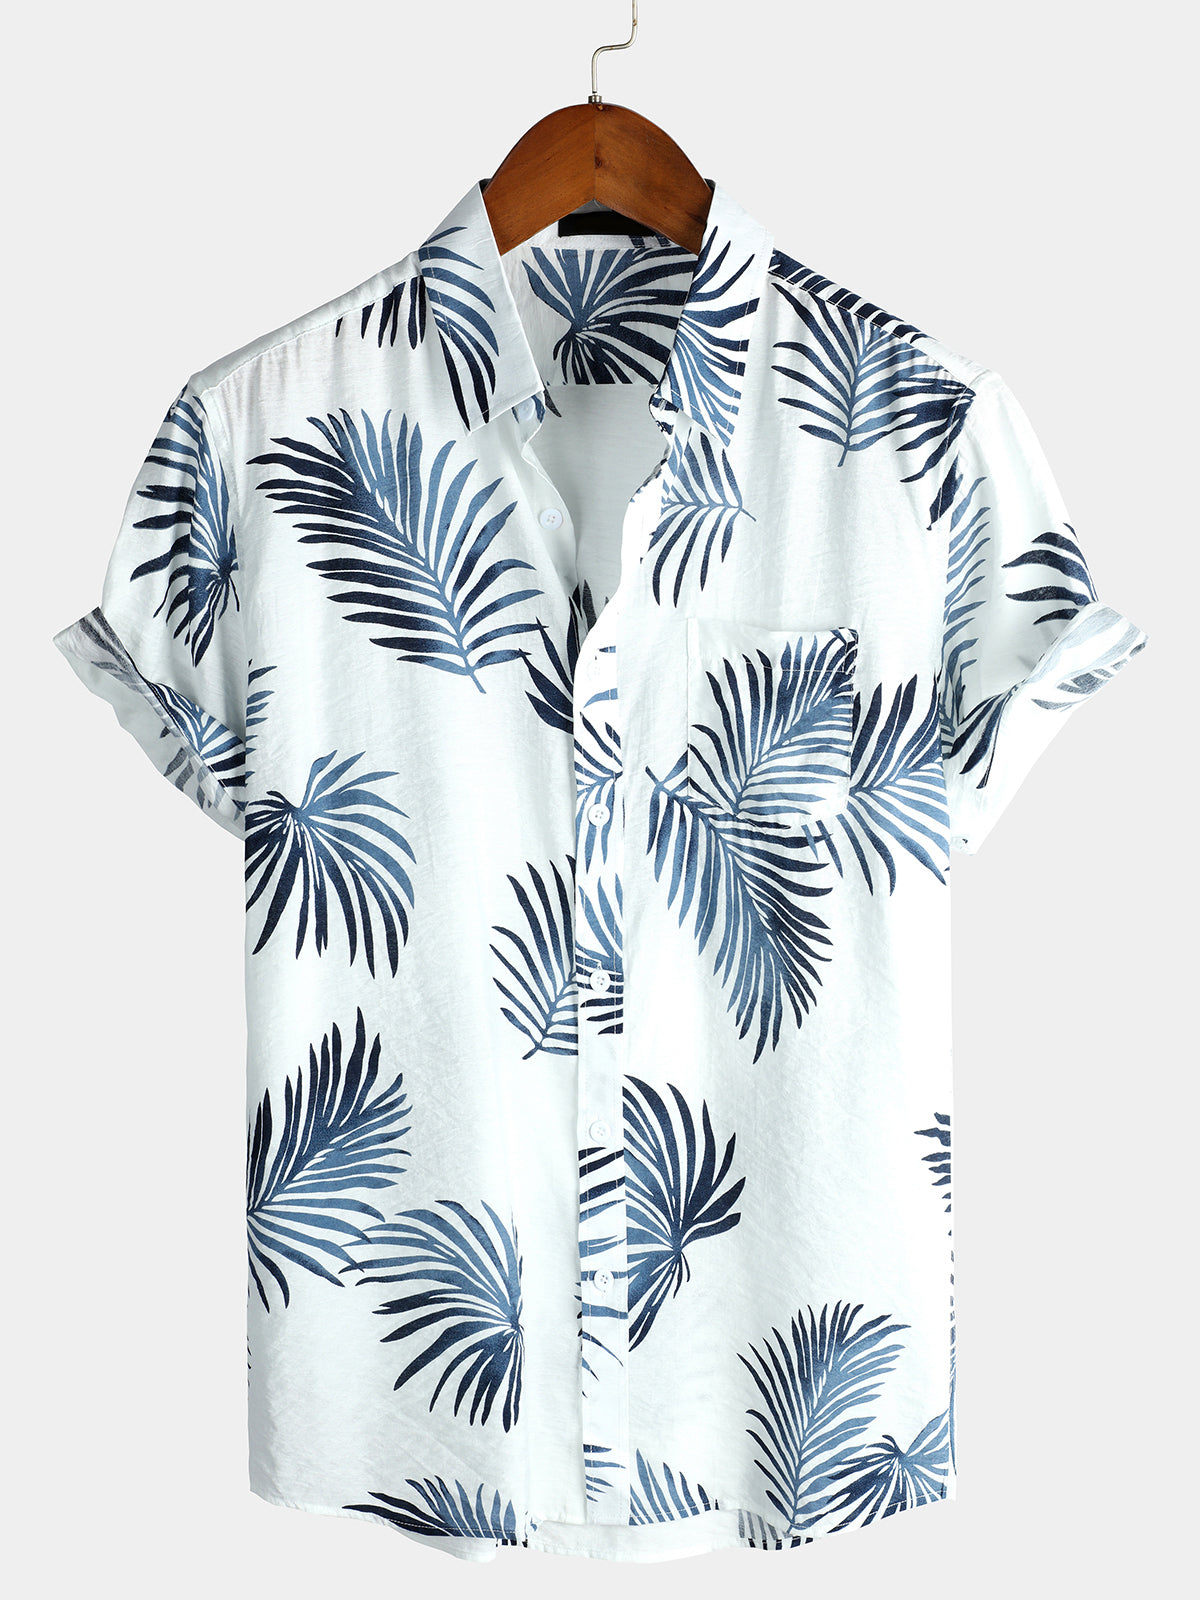 YIUME Men's Hawaiian Shirt Enchanted Lotus Tapestry Print Cotton Button-Down Short Sleeve Aloha Shirt M